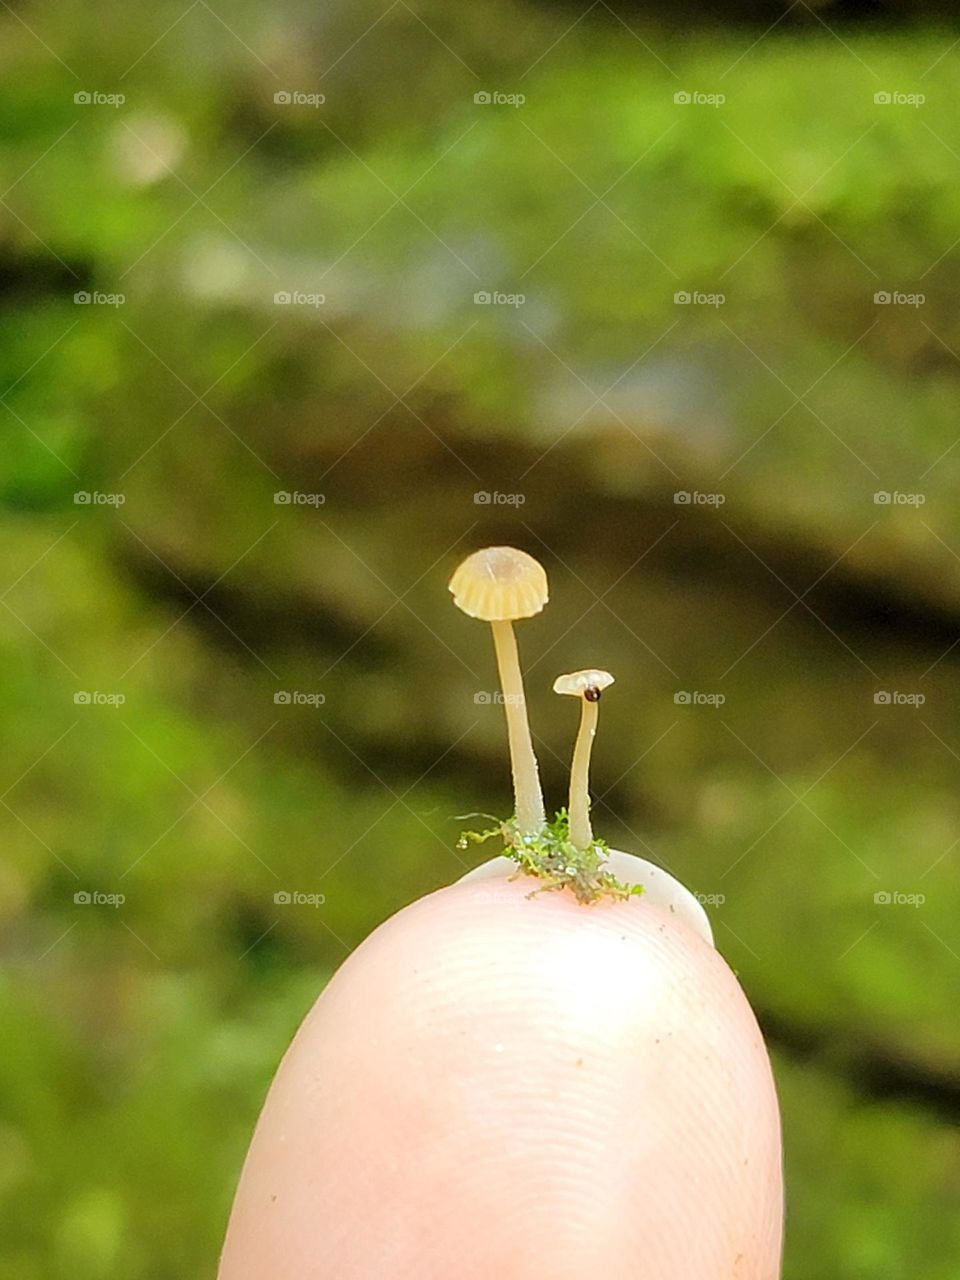 small fungi on a fingertip nail